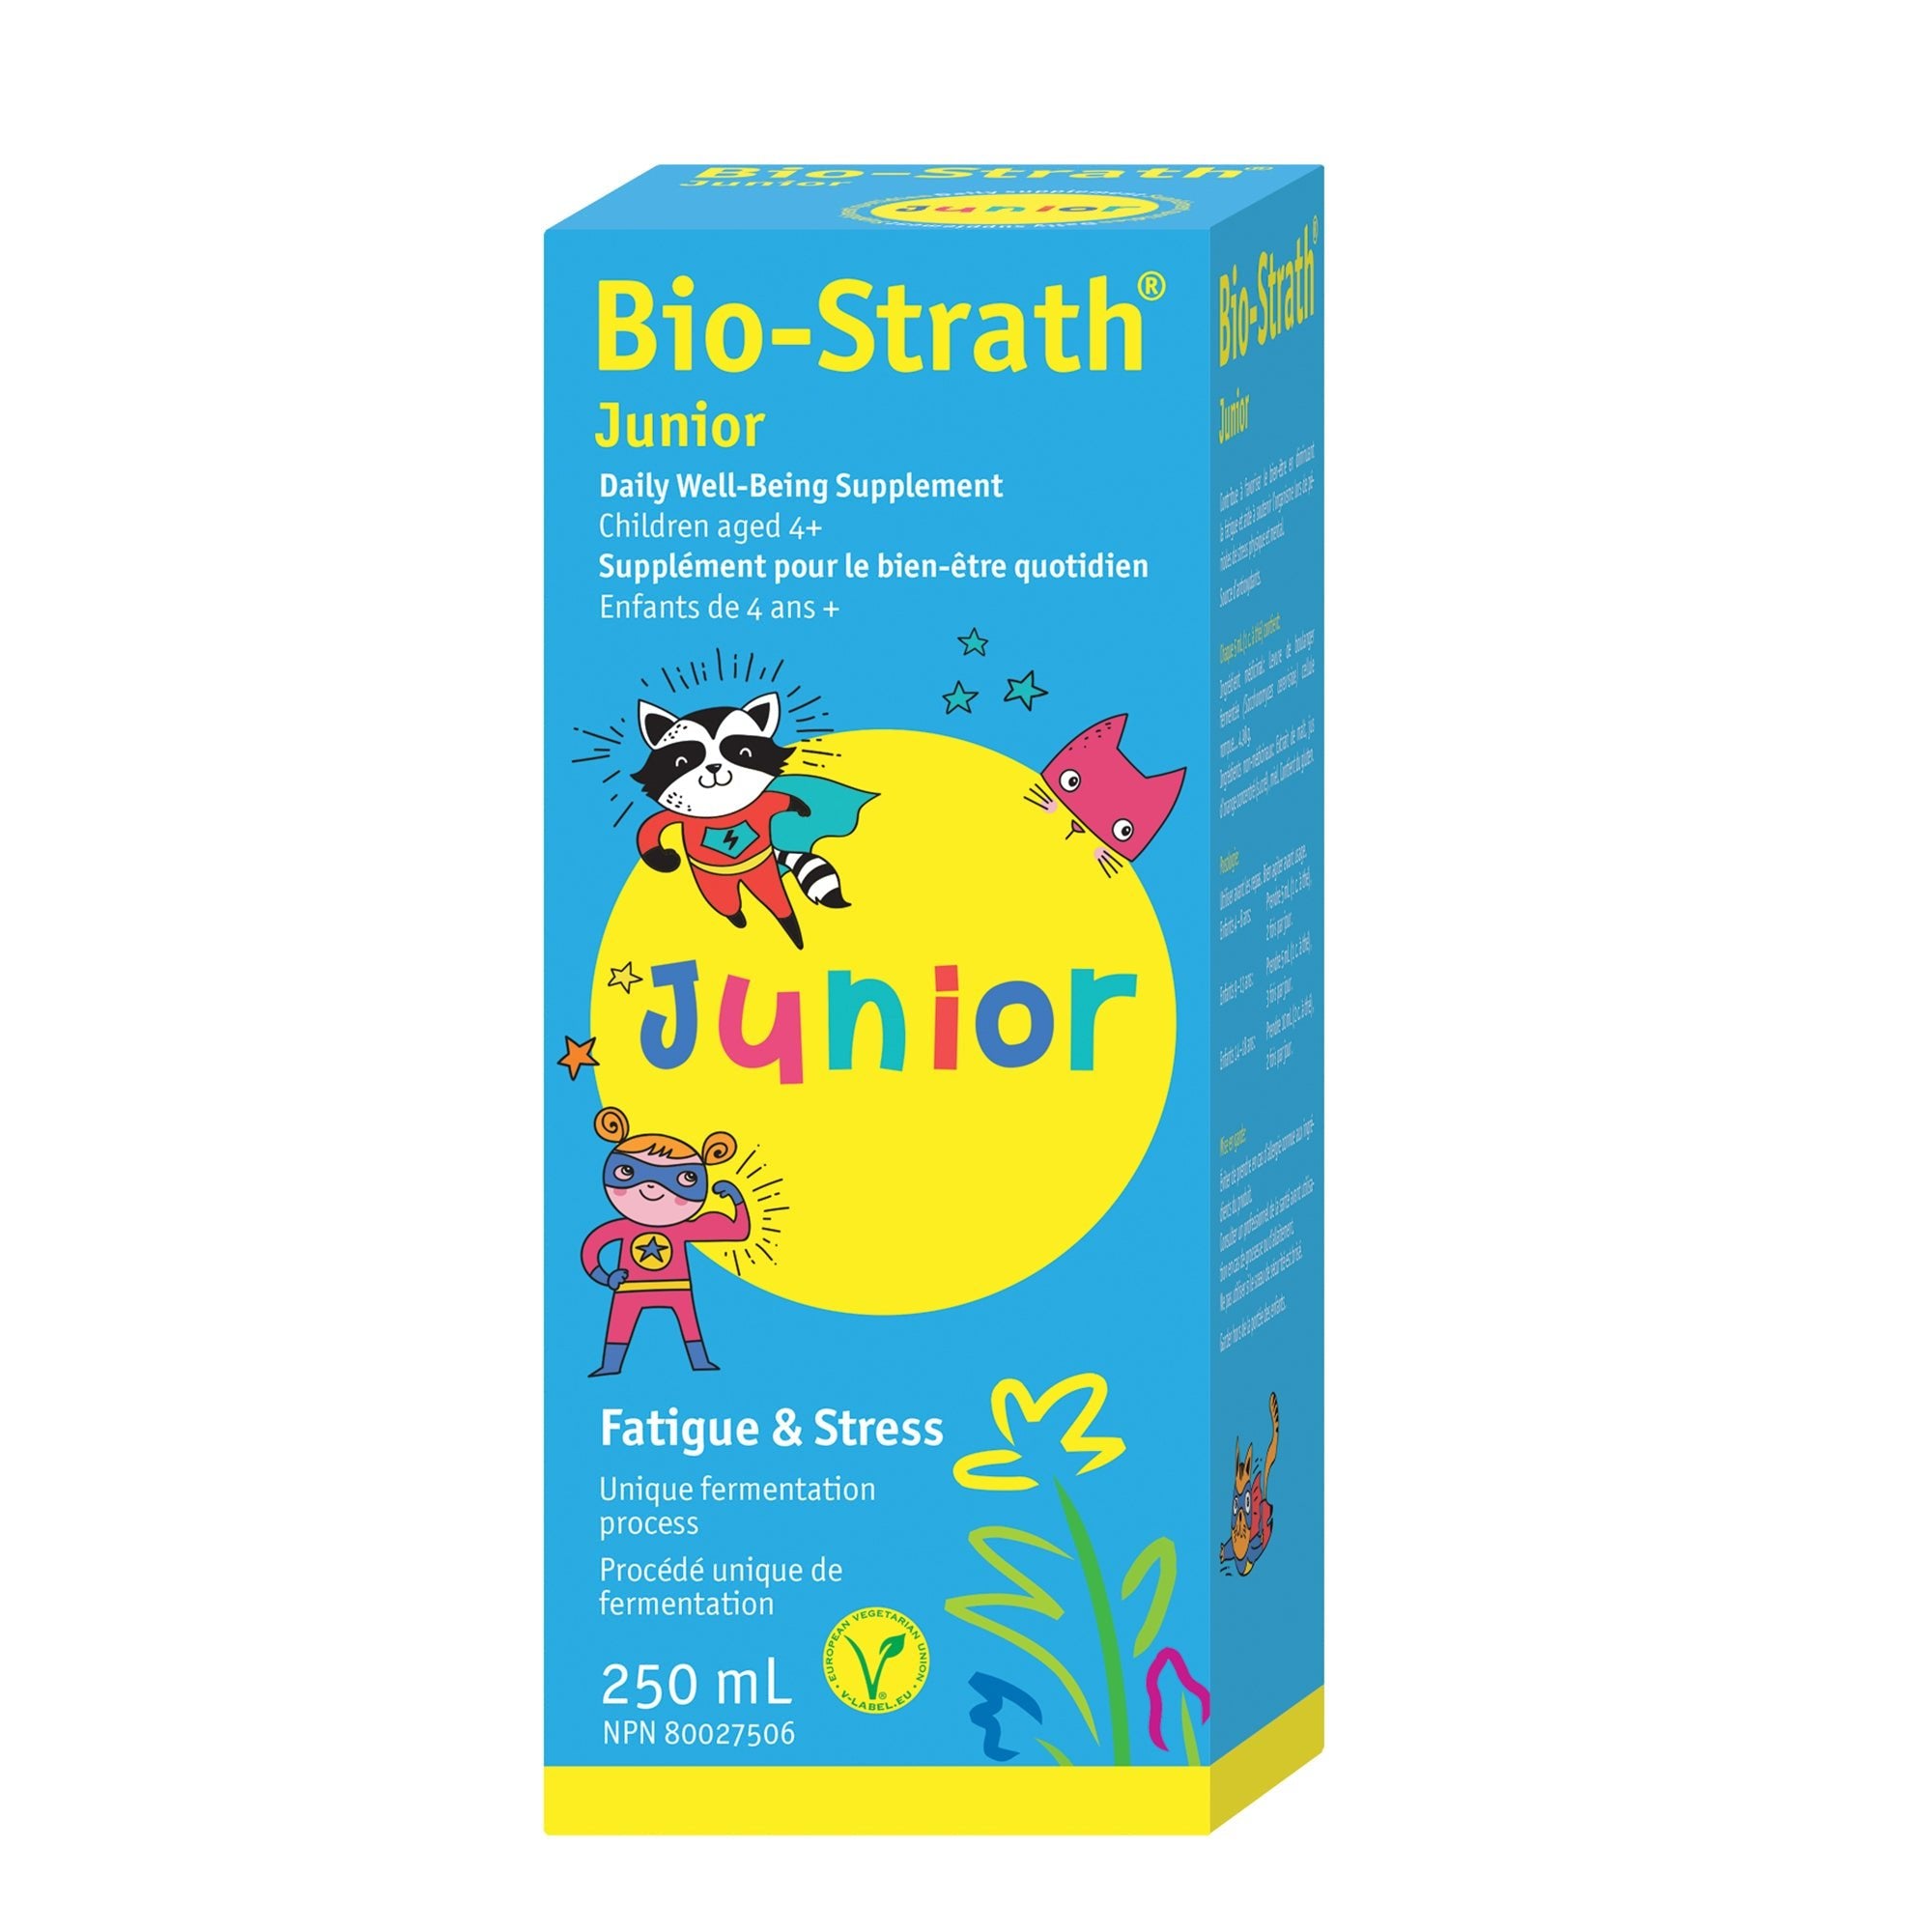 Fatigue & Stress Daily Well-Being Supplement Bio-Strath Junior 250mL - A.Vogel Canada